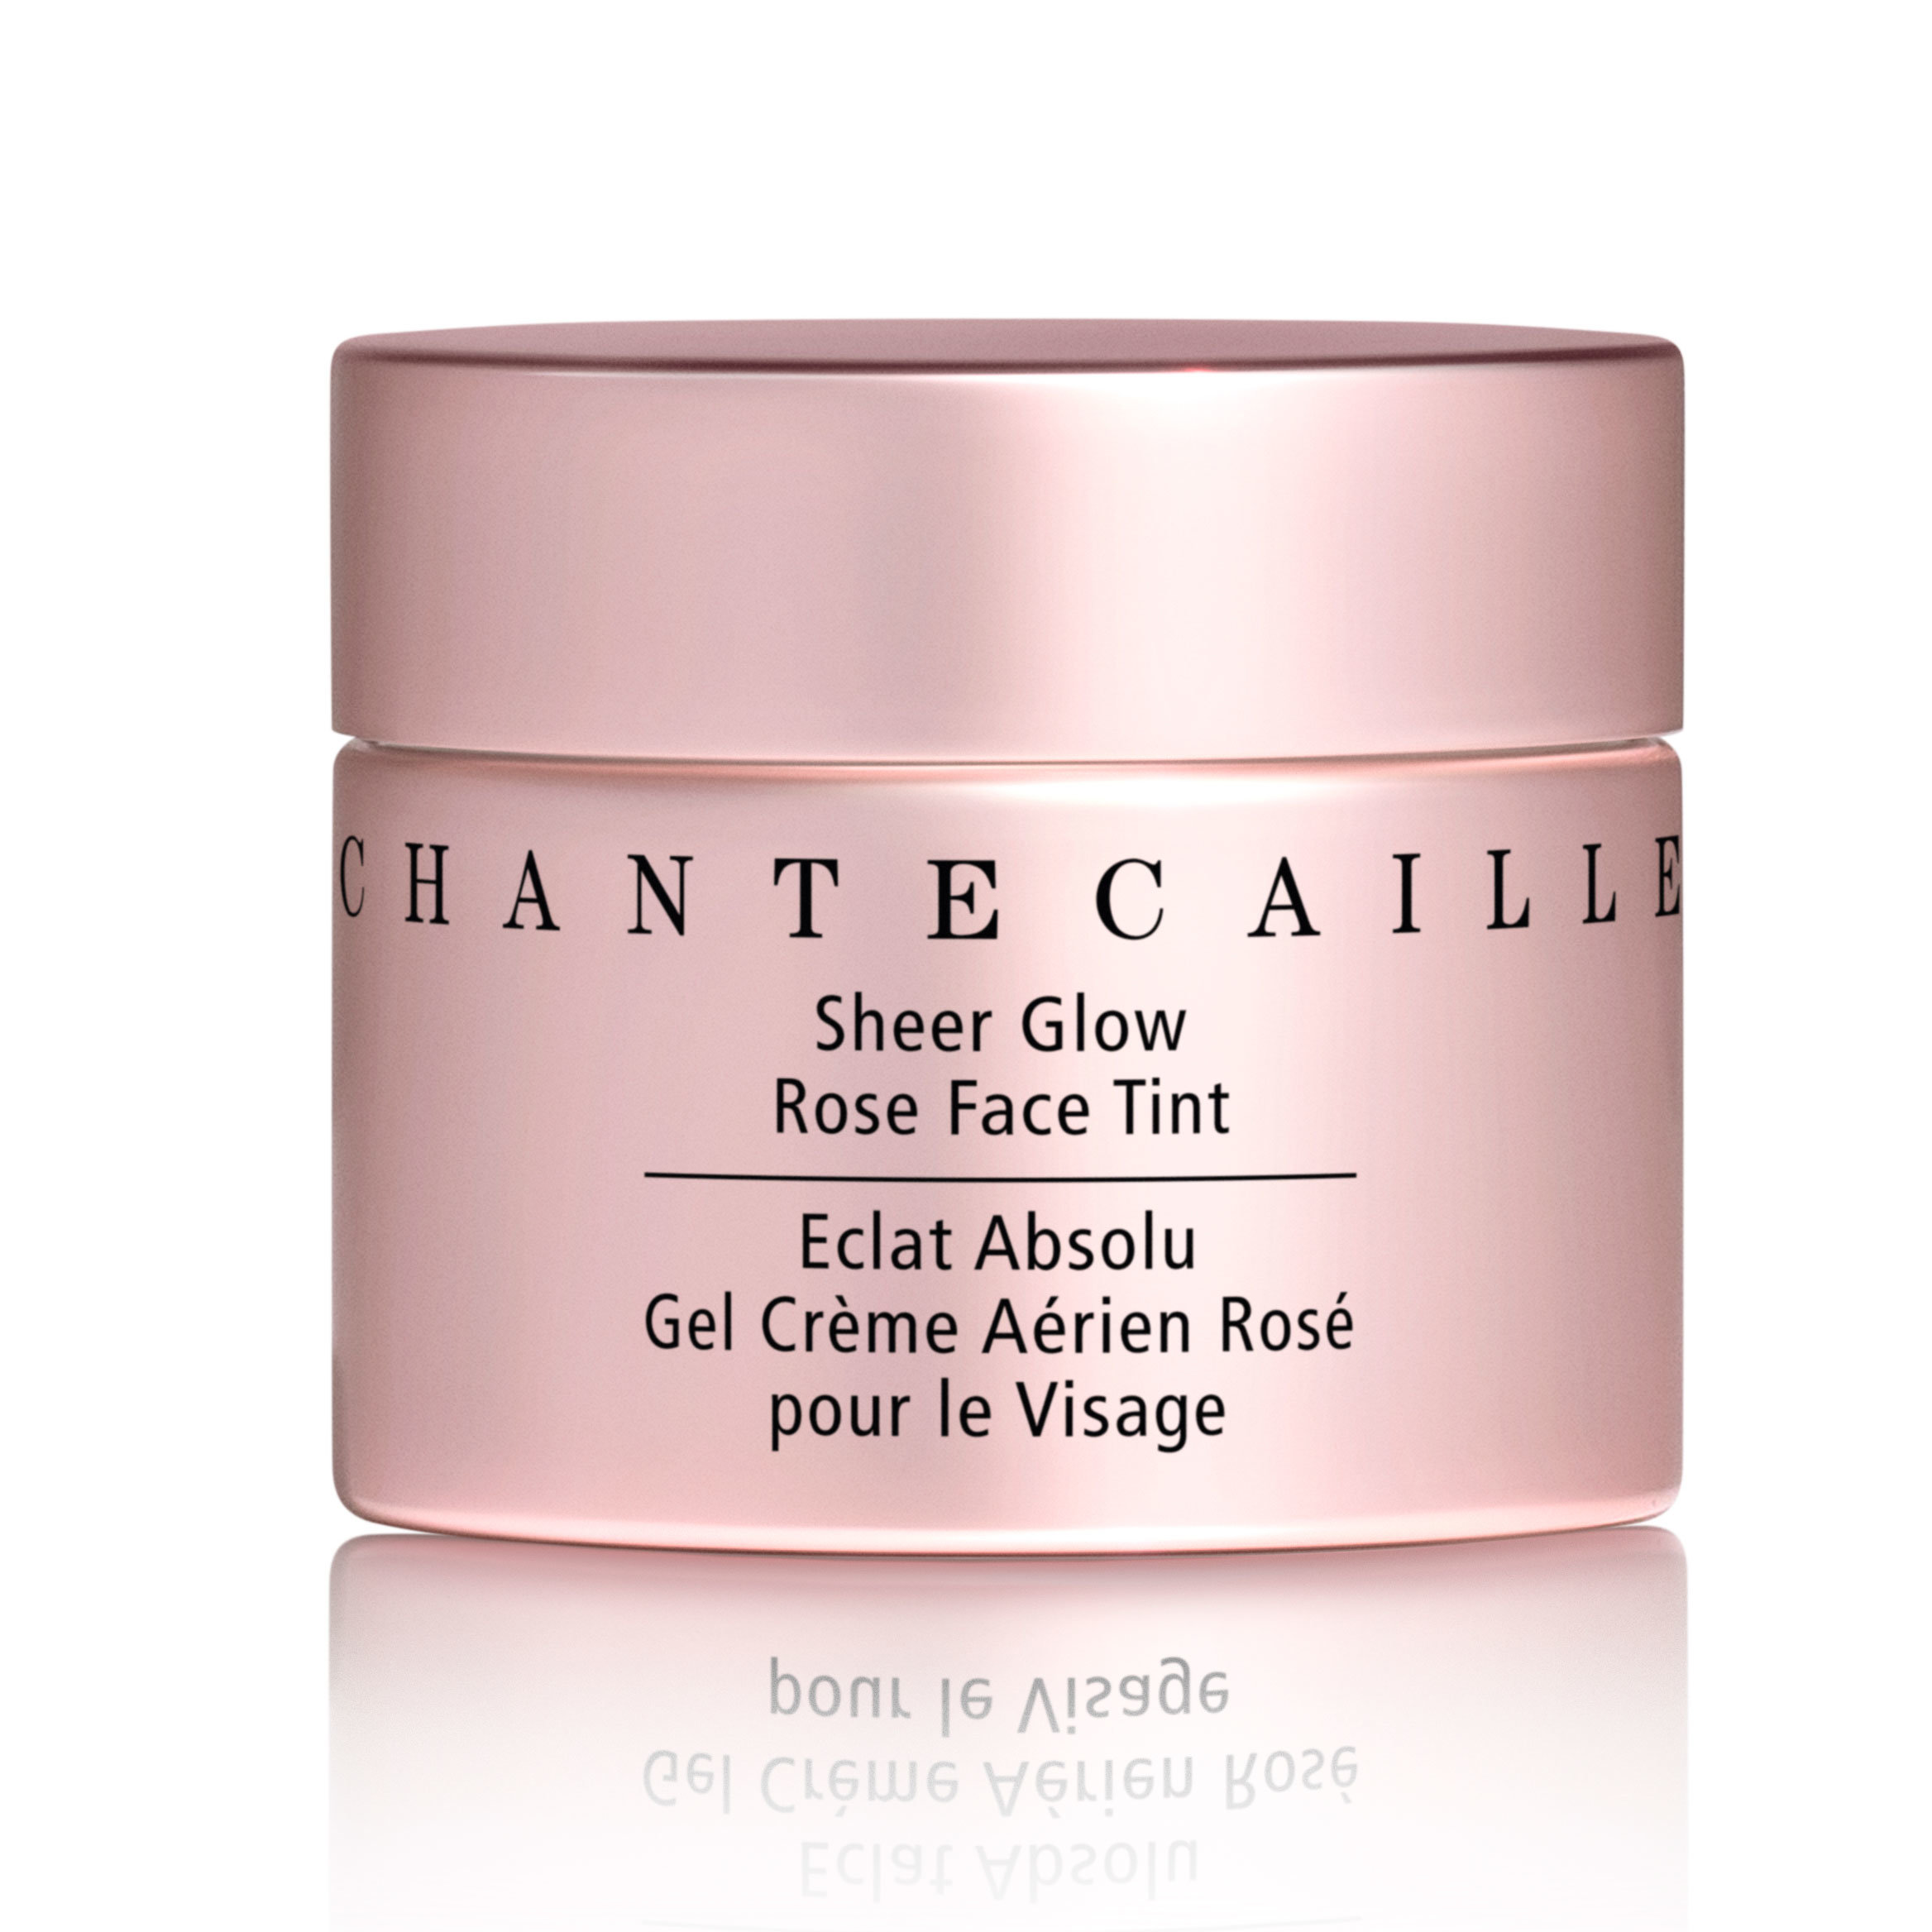 Shop the Chantecaille Sheer Glow Rose Face Tint on Beautylish.com